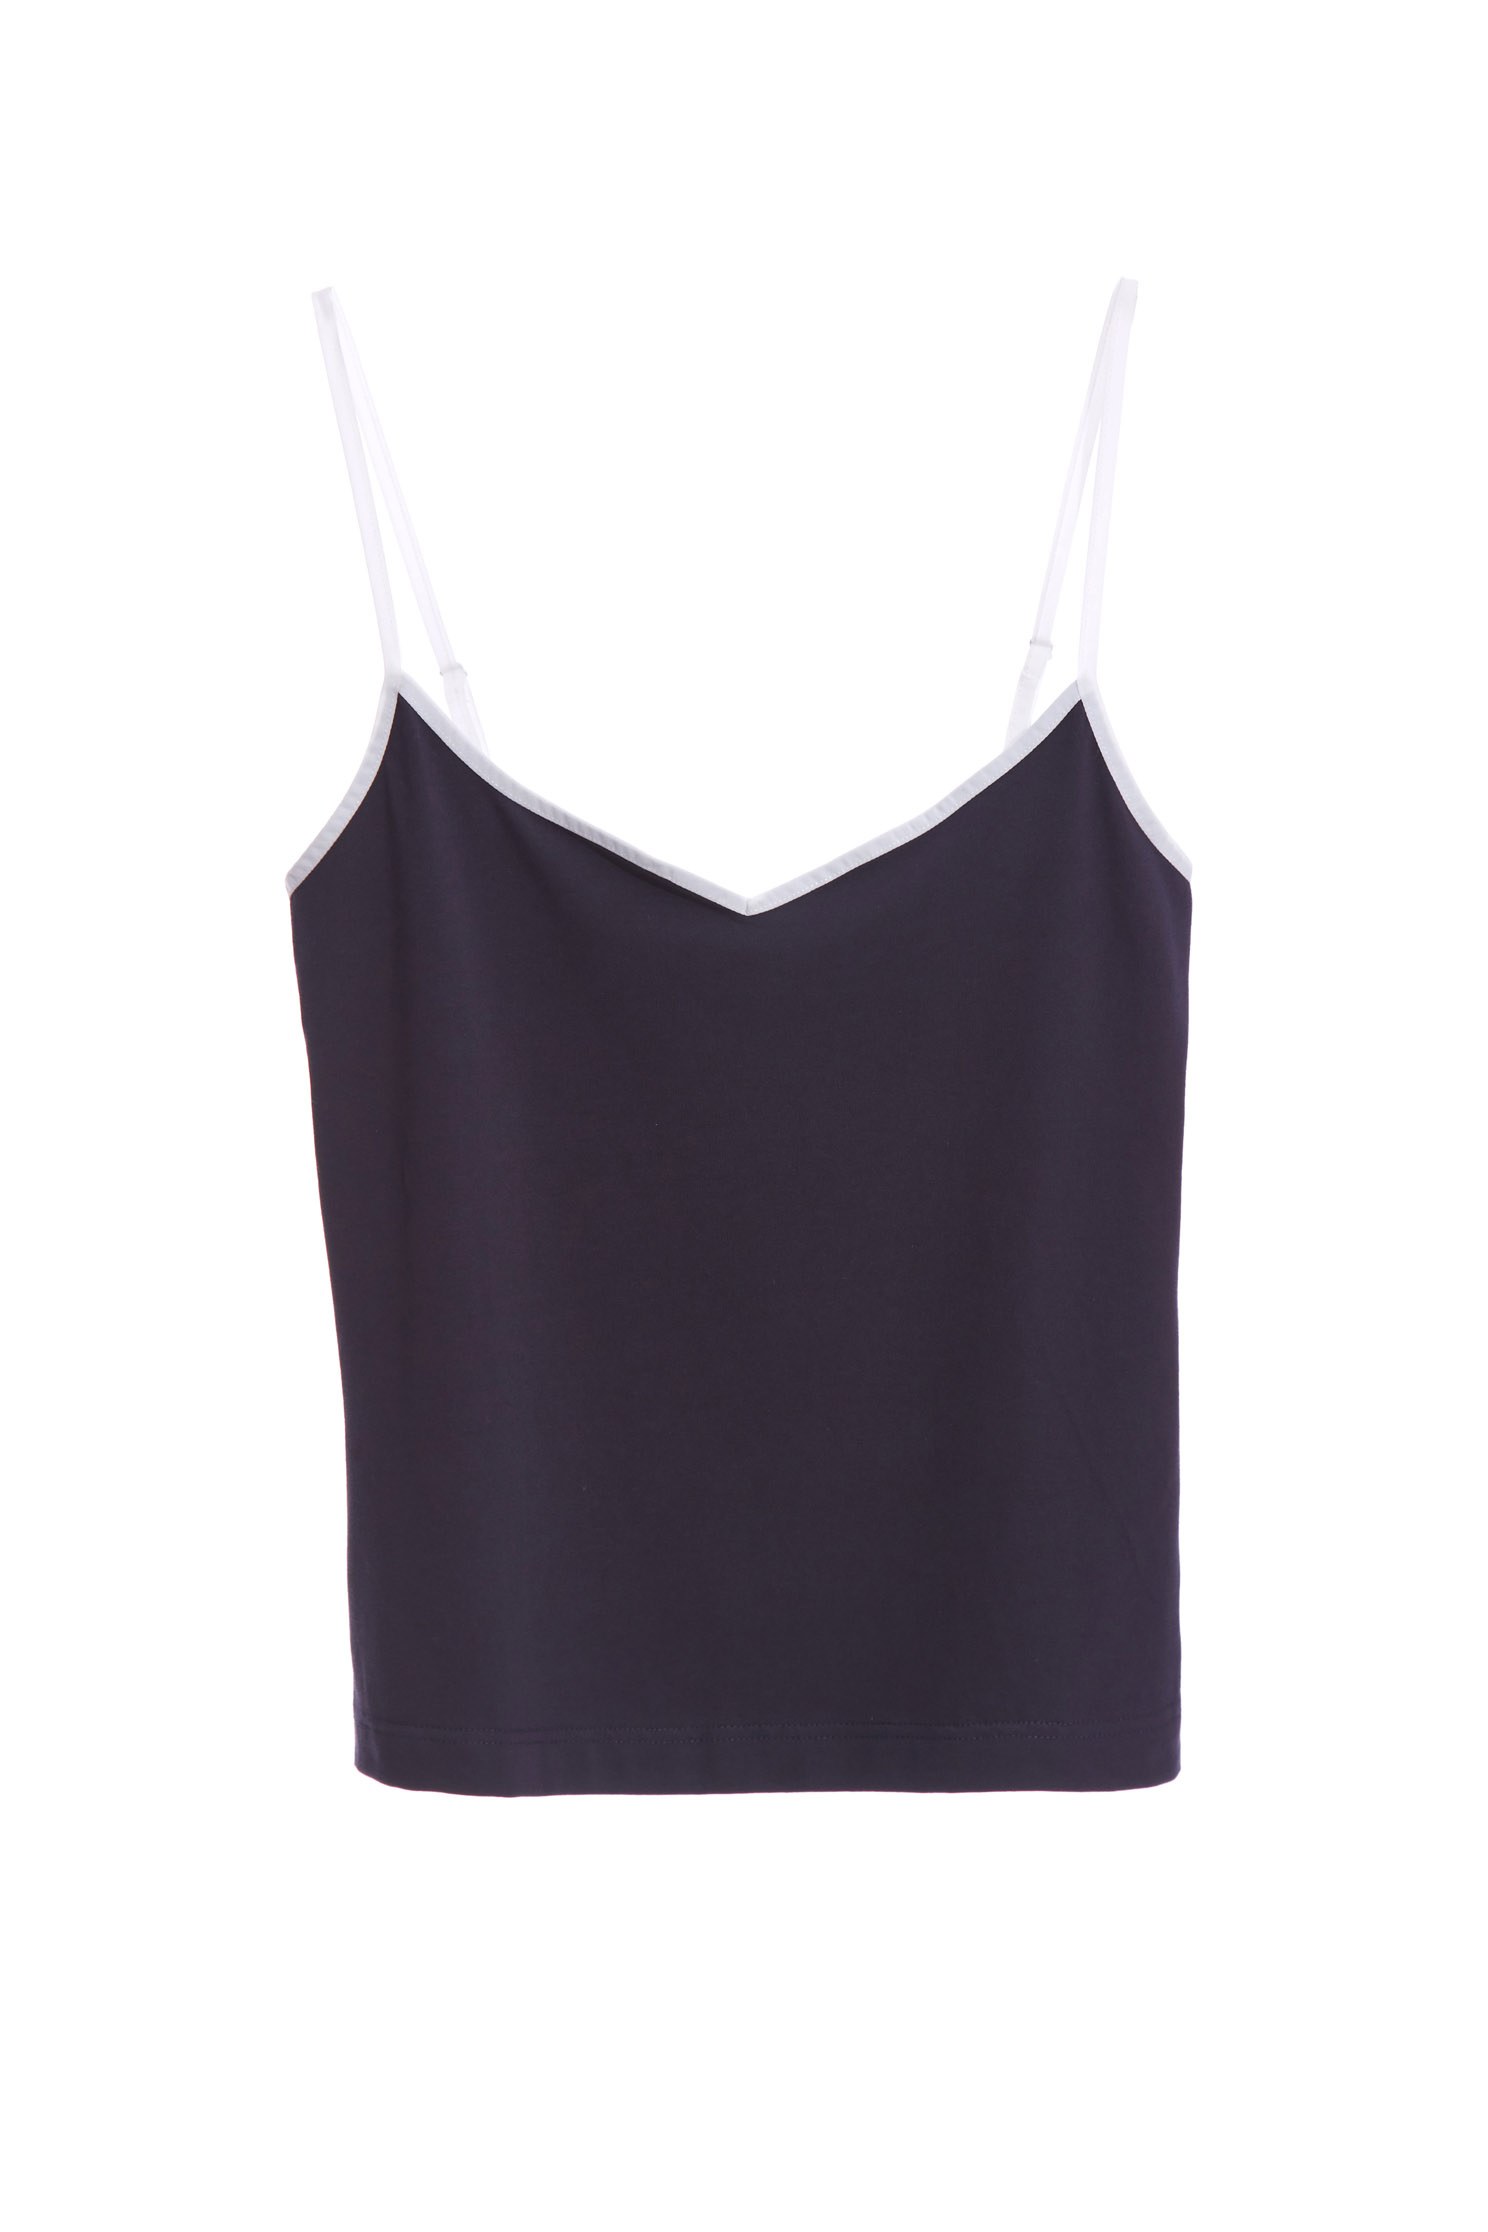 Contrast sweetheart neckline vest,Season (SS) Look,coolsummer,Cotton,Thin straps,sleeveless tops